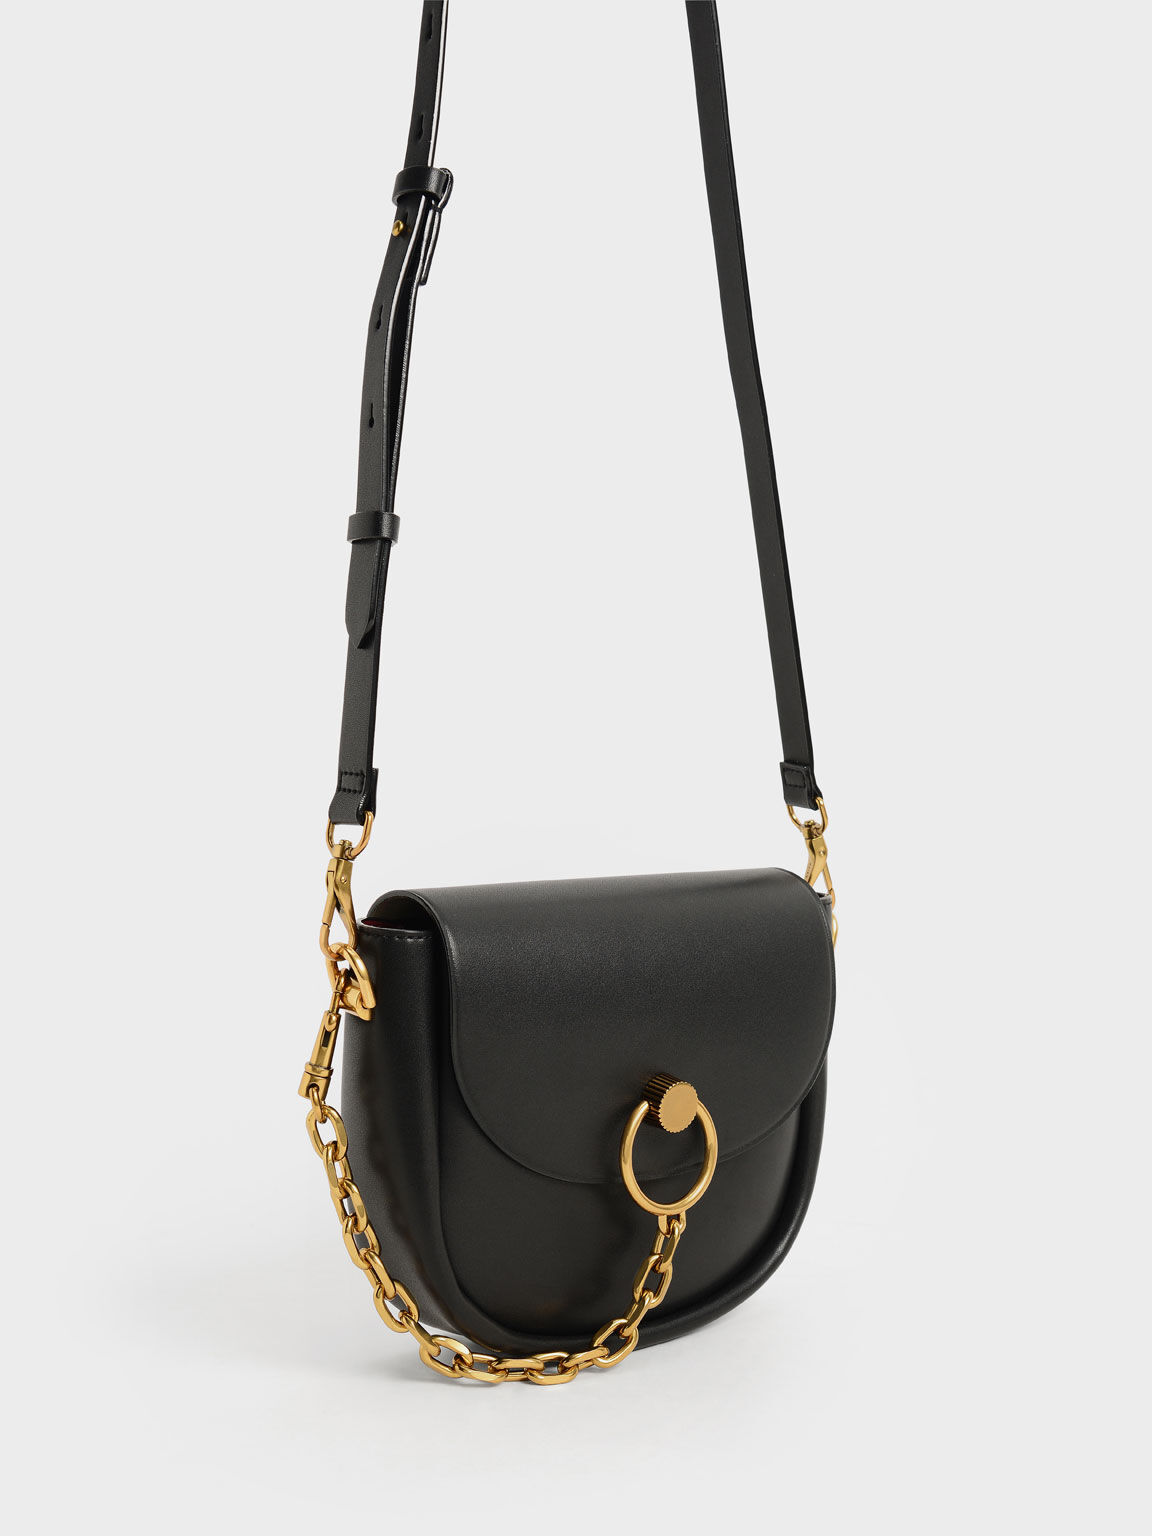 Becca Chunky Chain-Link Saddle Bag, Black, hi-res